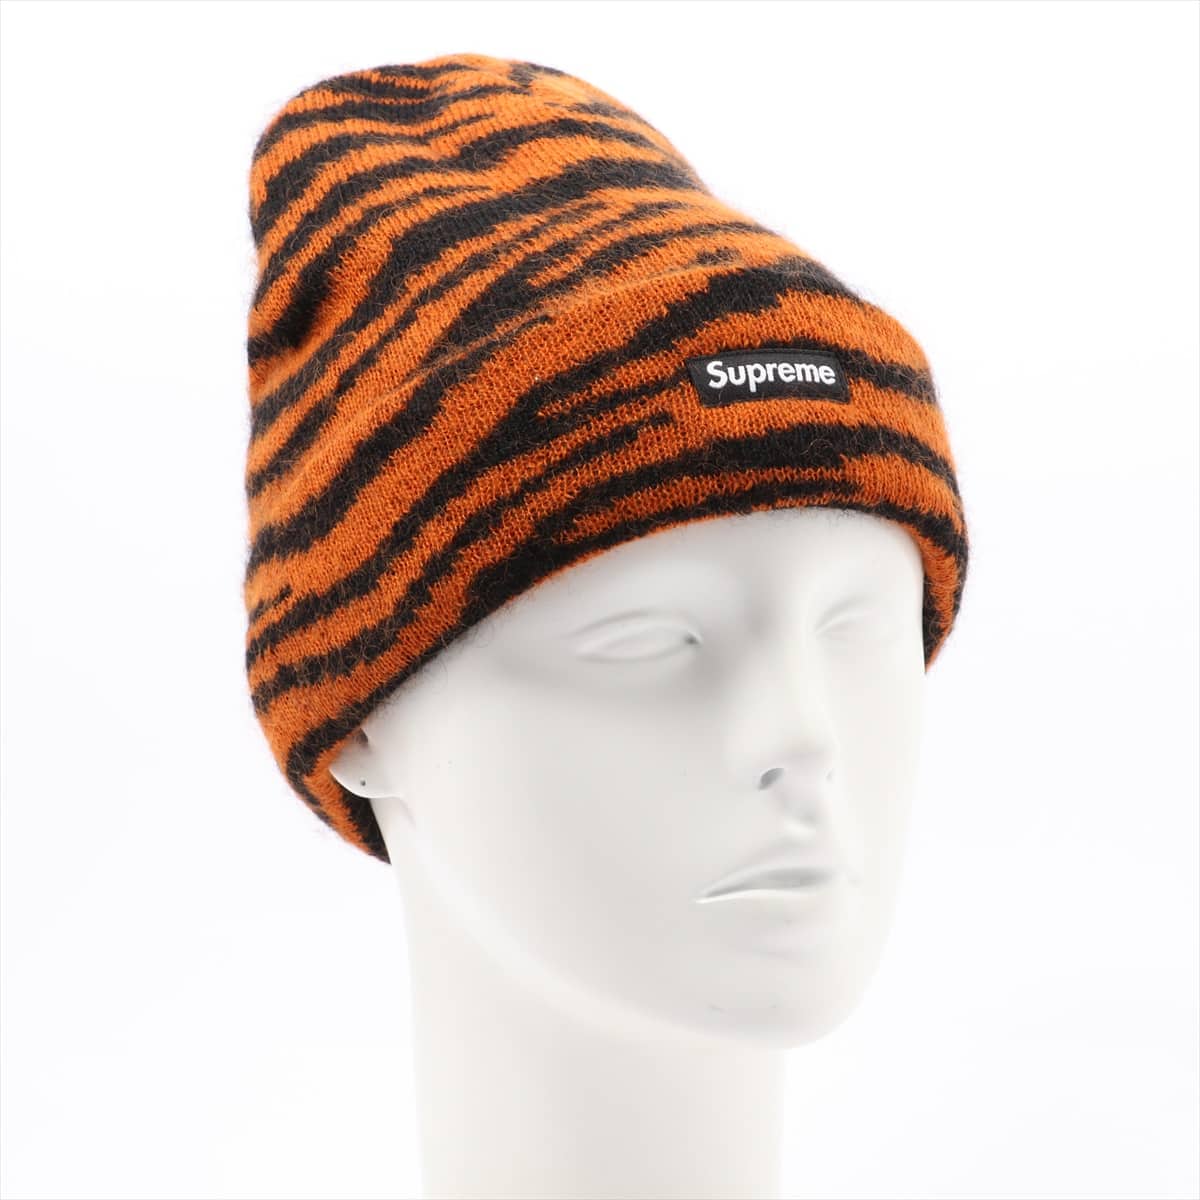 Supreme Knit cap Acrylic Orange Animal pattern